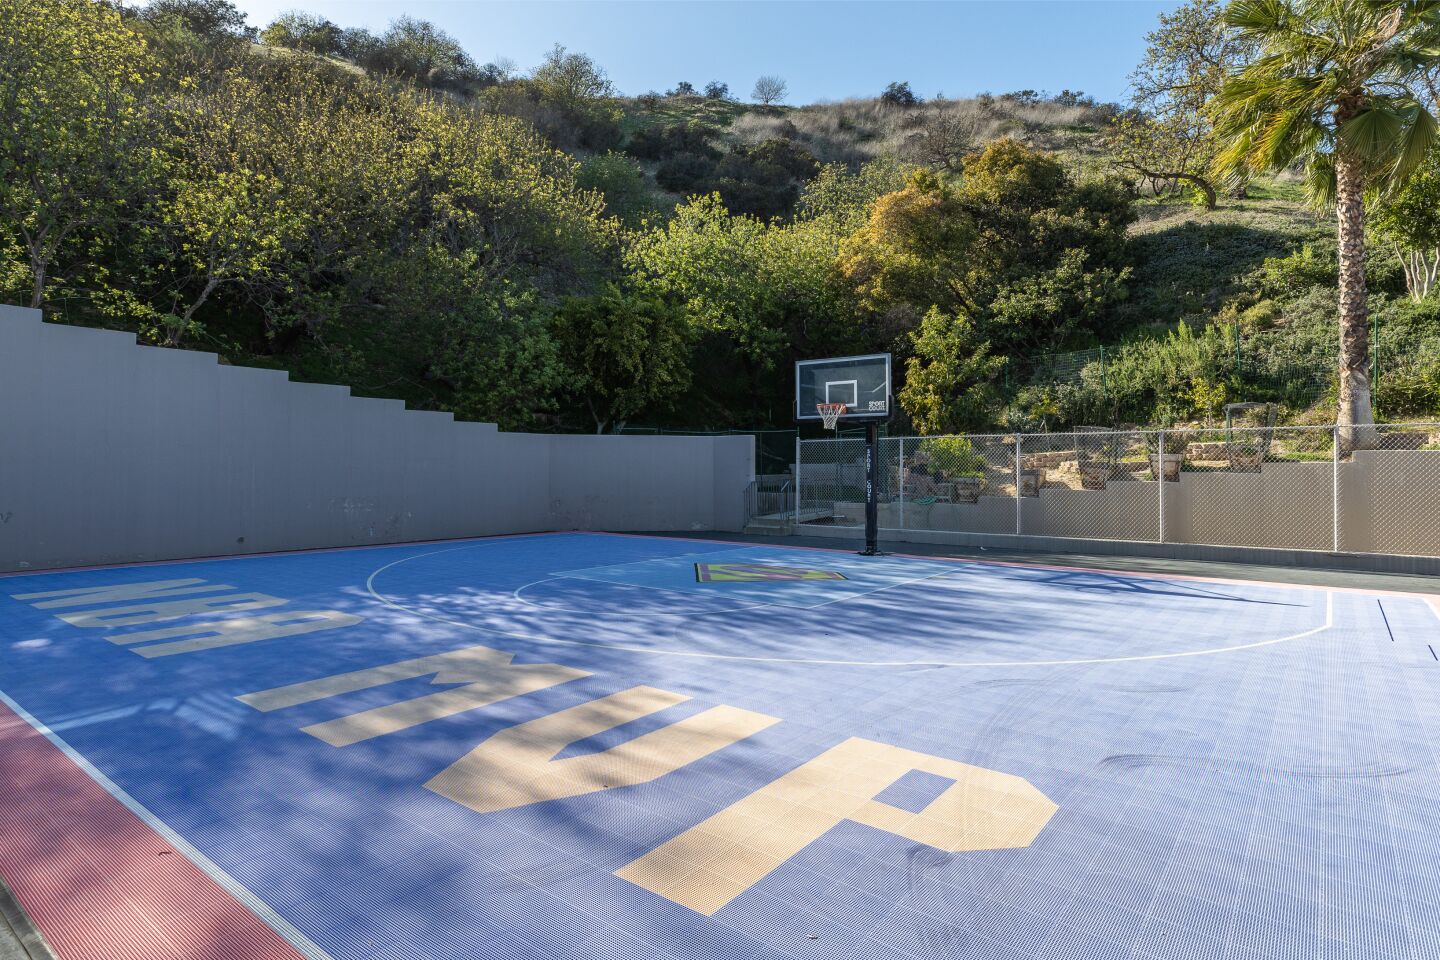 The custom basketball court.